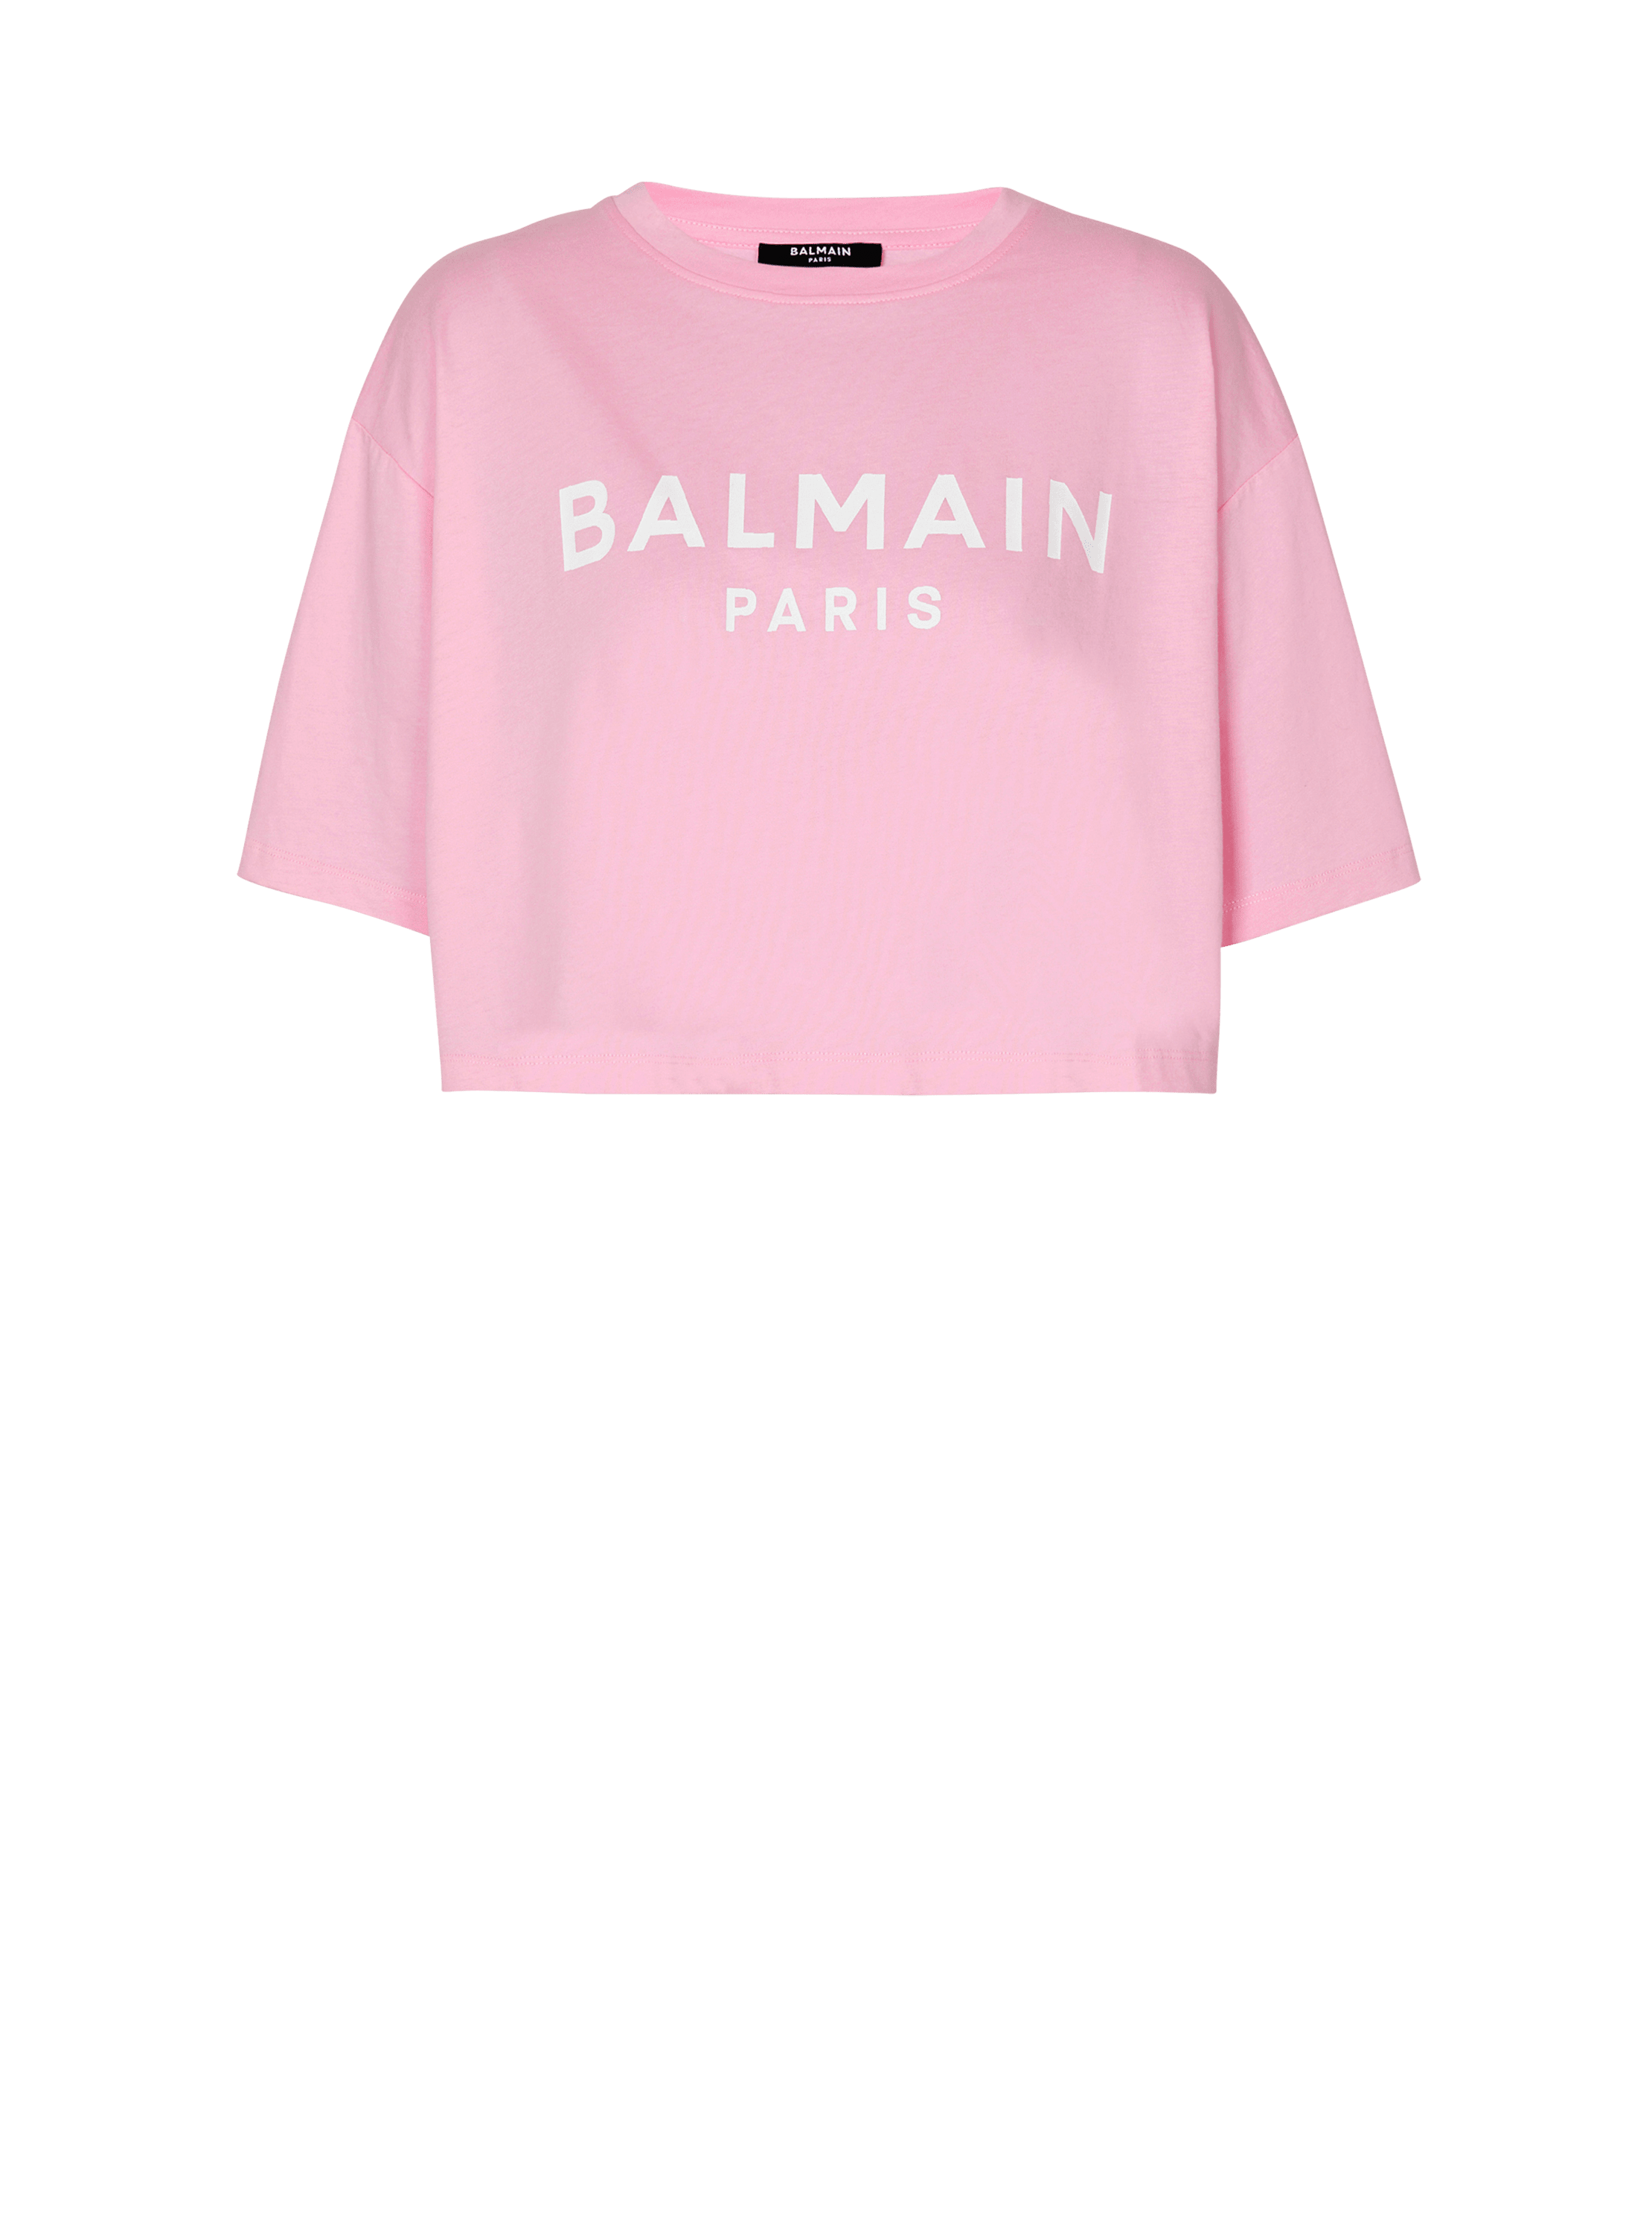 Balmain Paris T-Shirt, rosa, hi-res